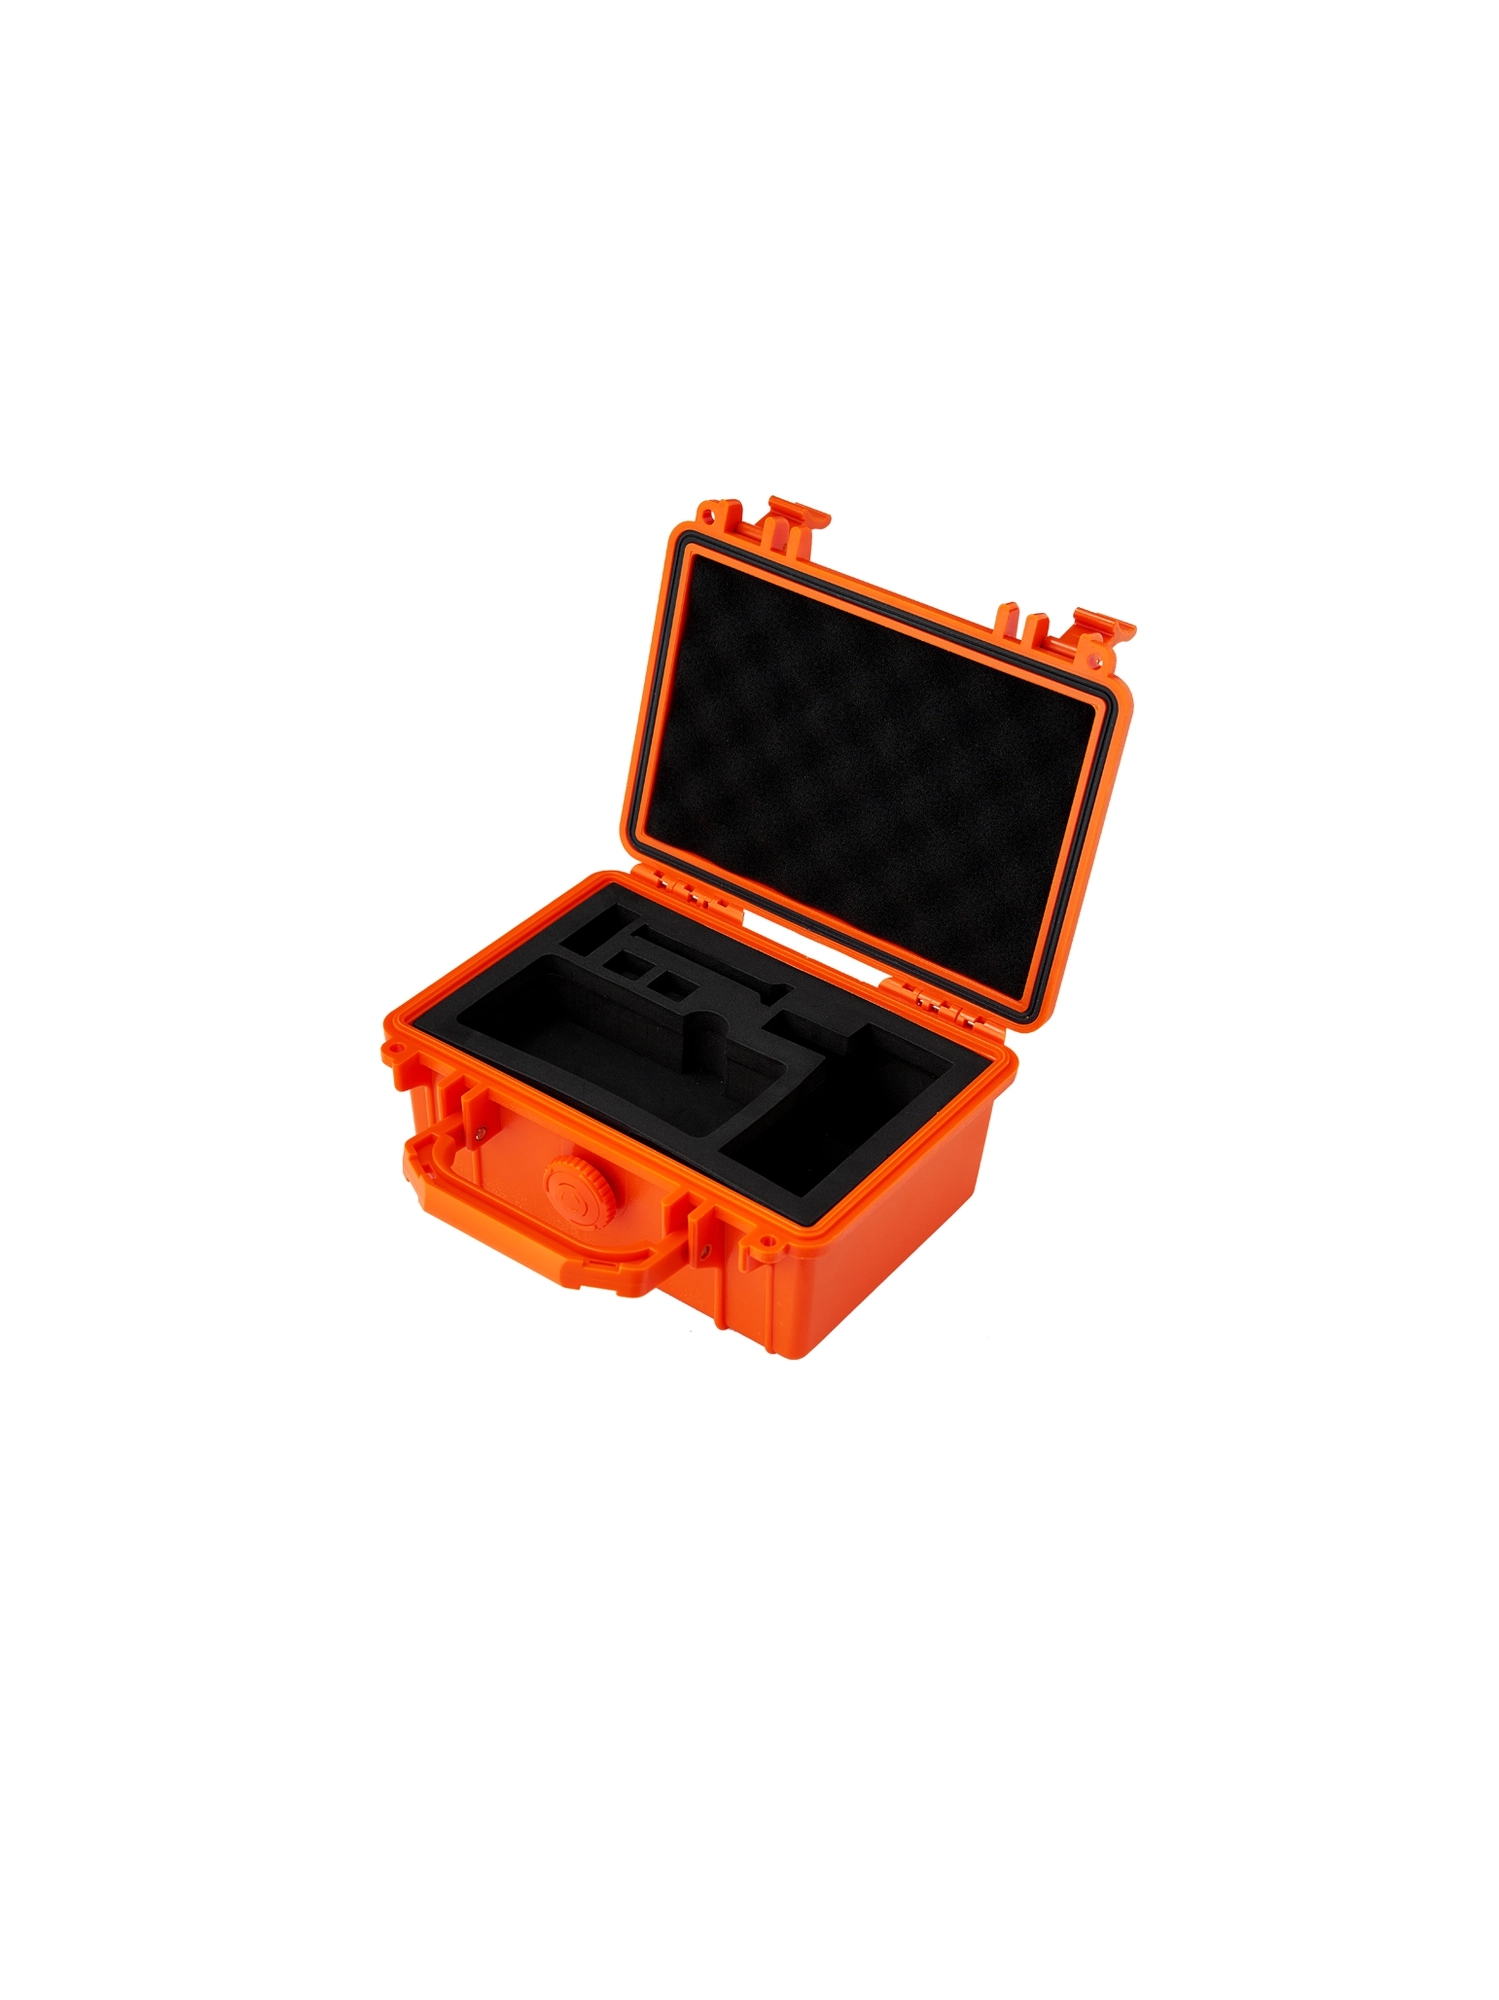 Кейс Vapesuite для вапорайзера Crafty+, оранжевый